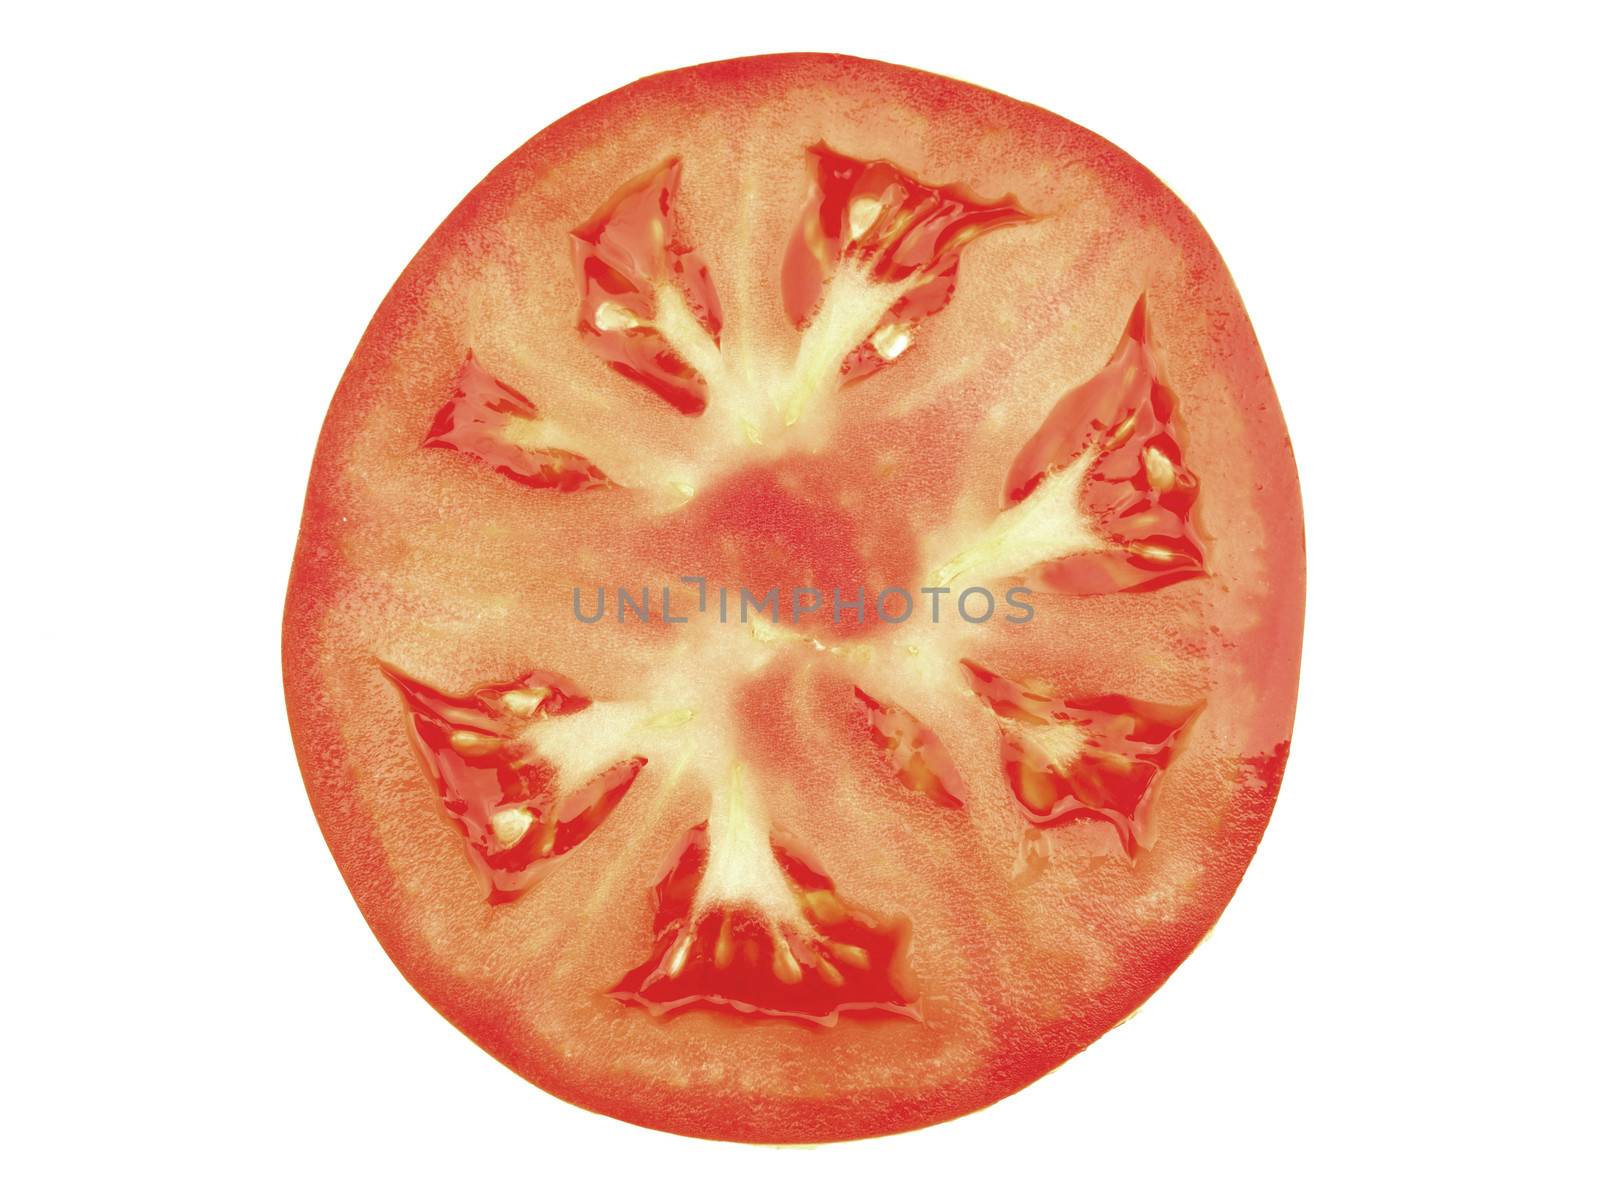 Tomato by Whiteboxmedia